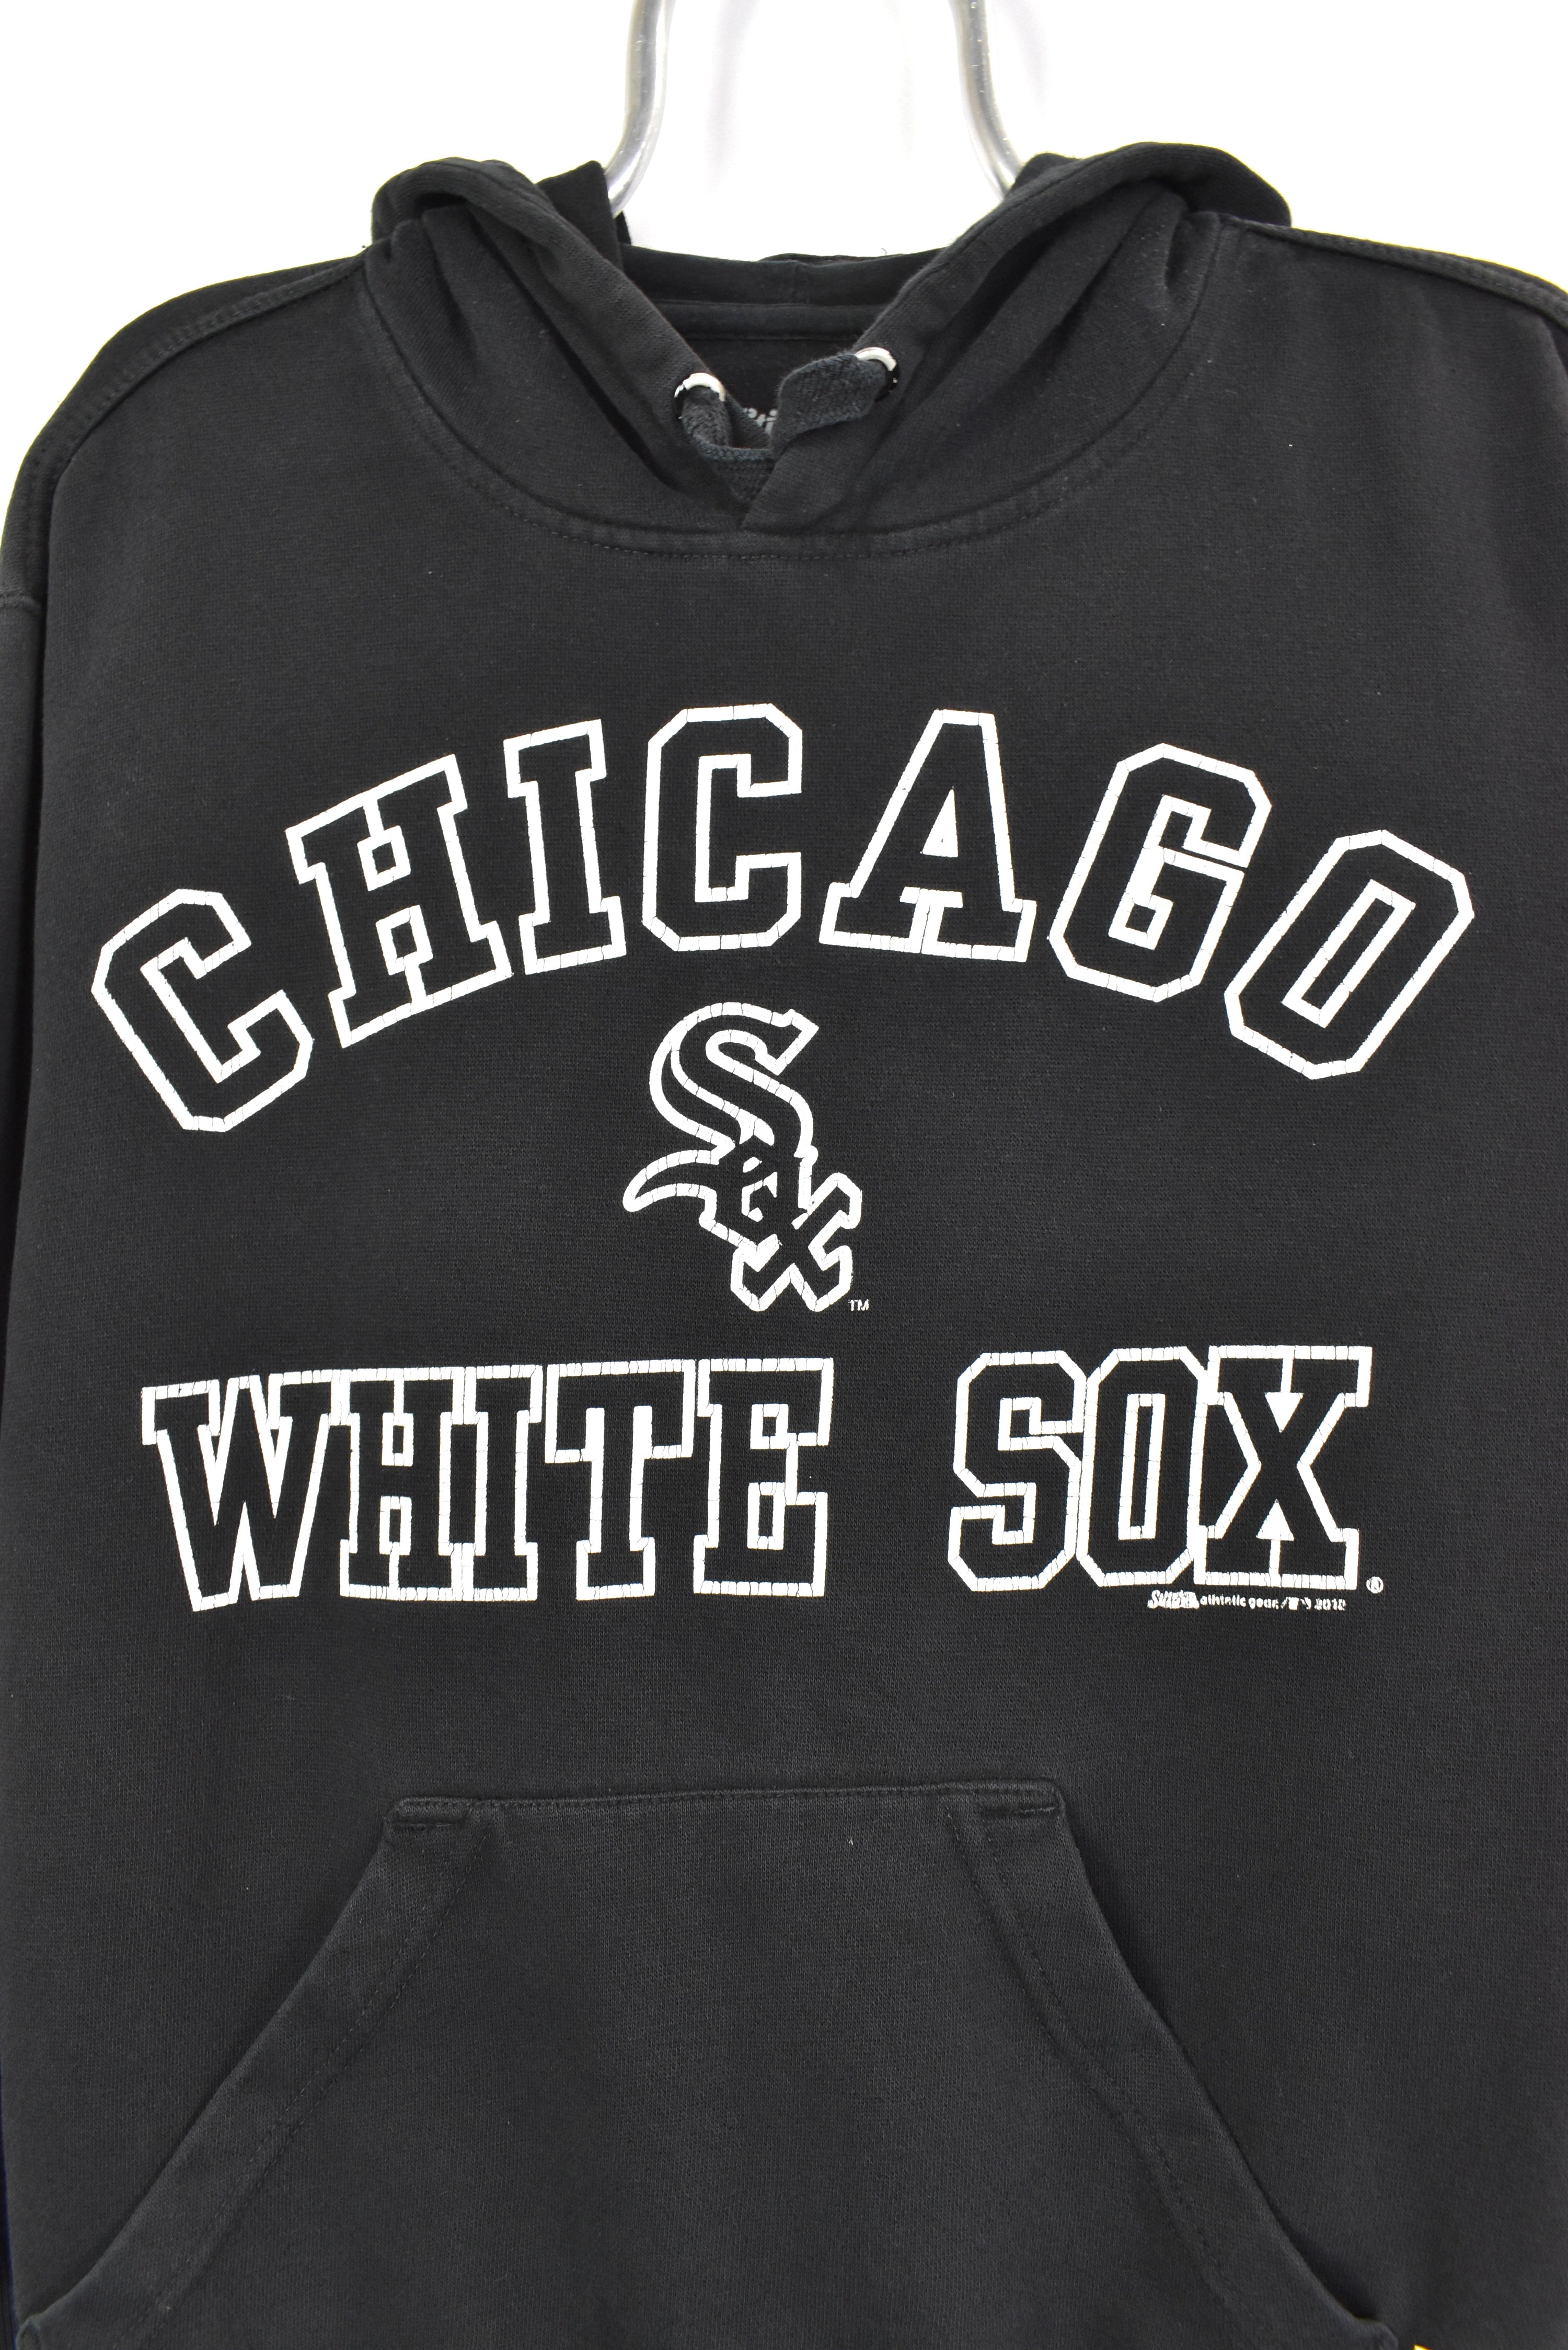 Modern Chicago White Sox hoodie, 2012 MLB graphic sweatshirt - medium, black PRO SPORT